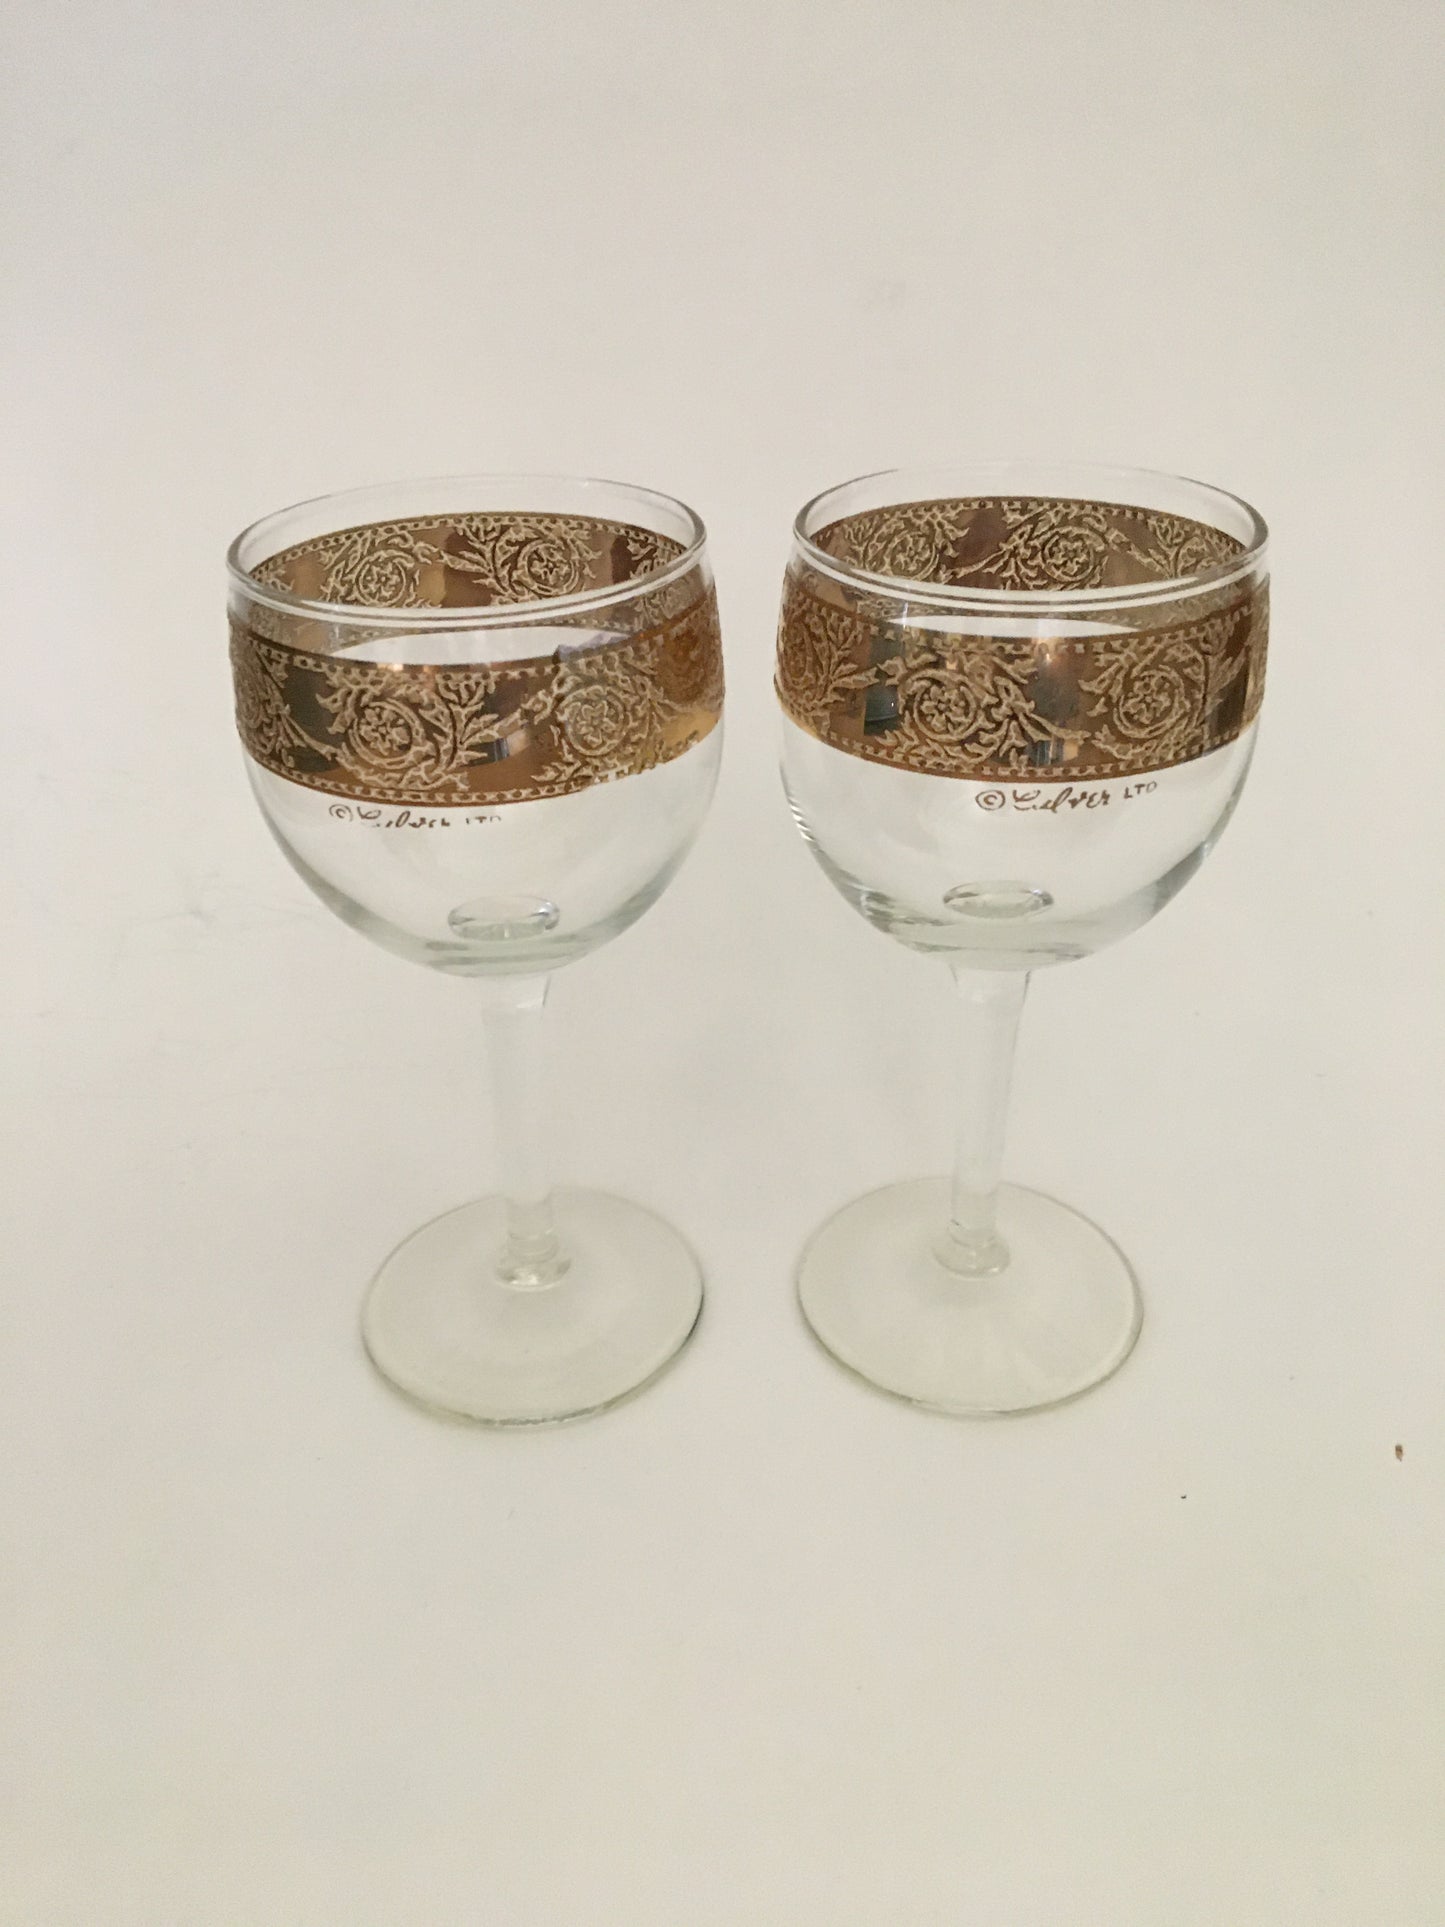 Culver Tyrol Wine Glasses (2)